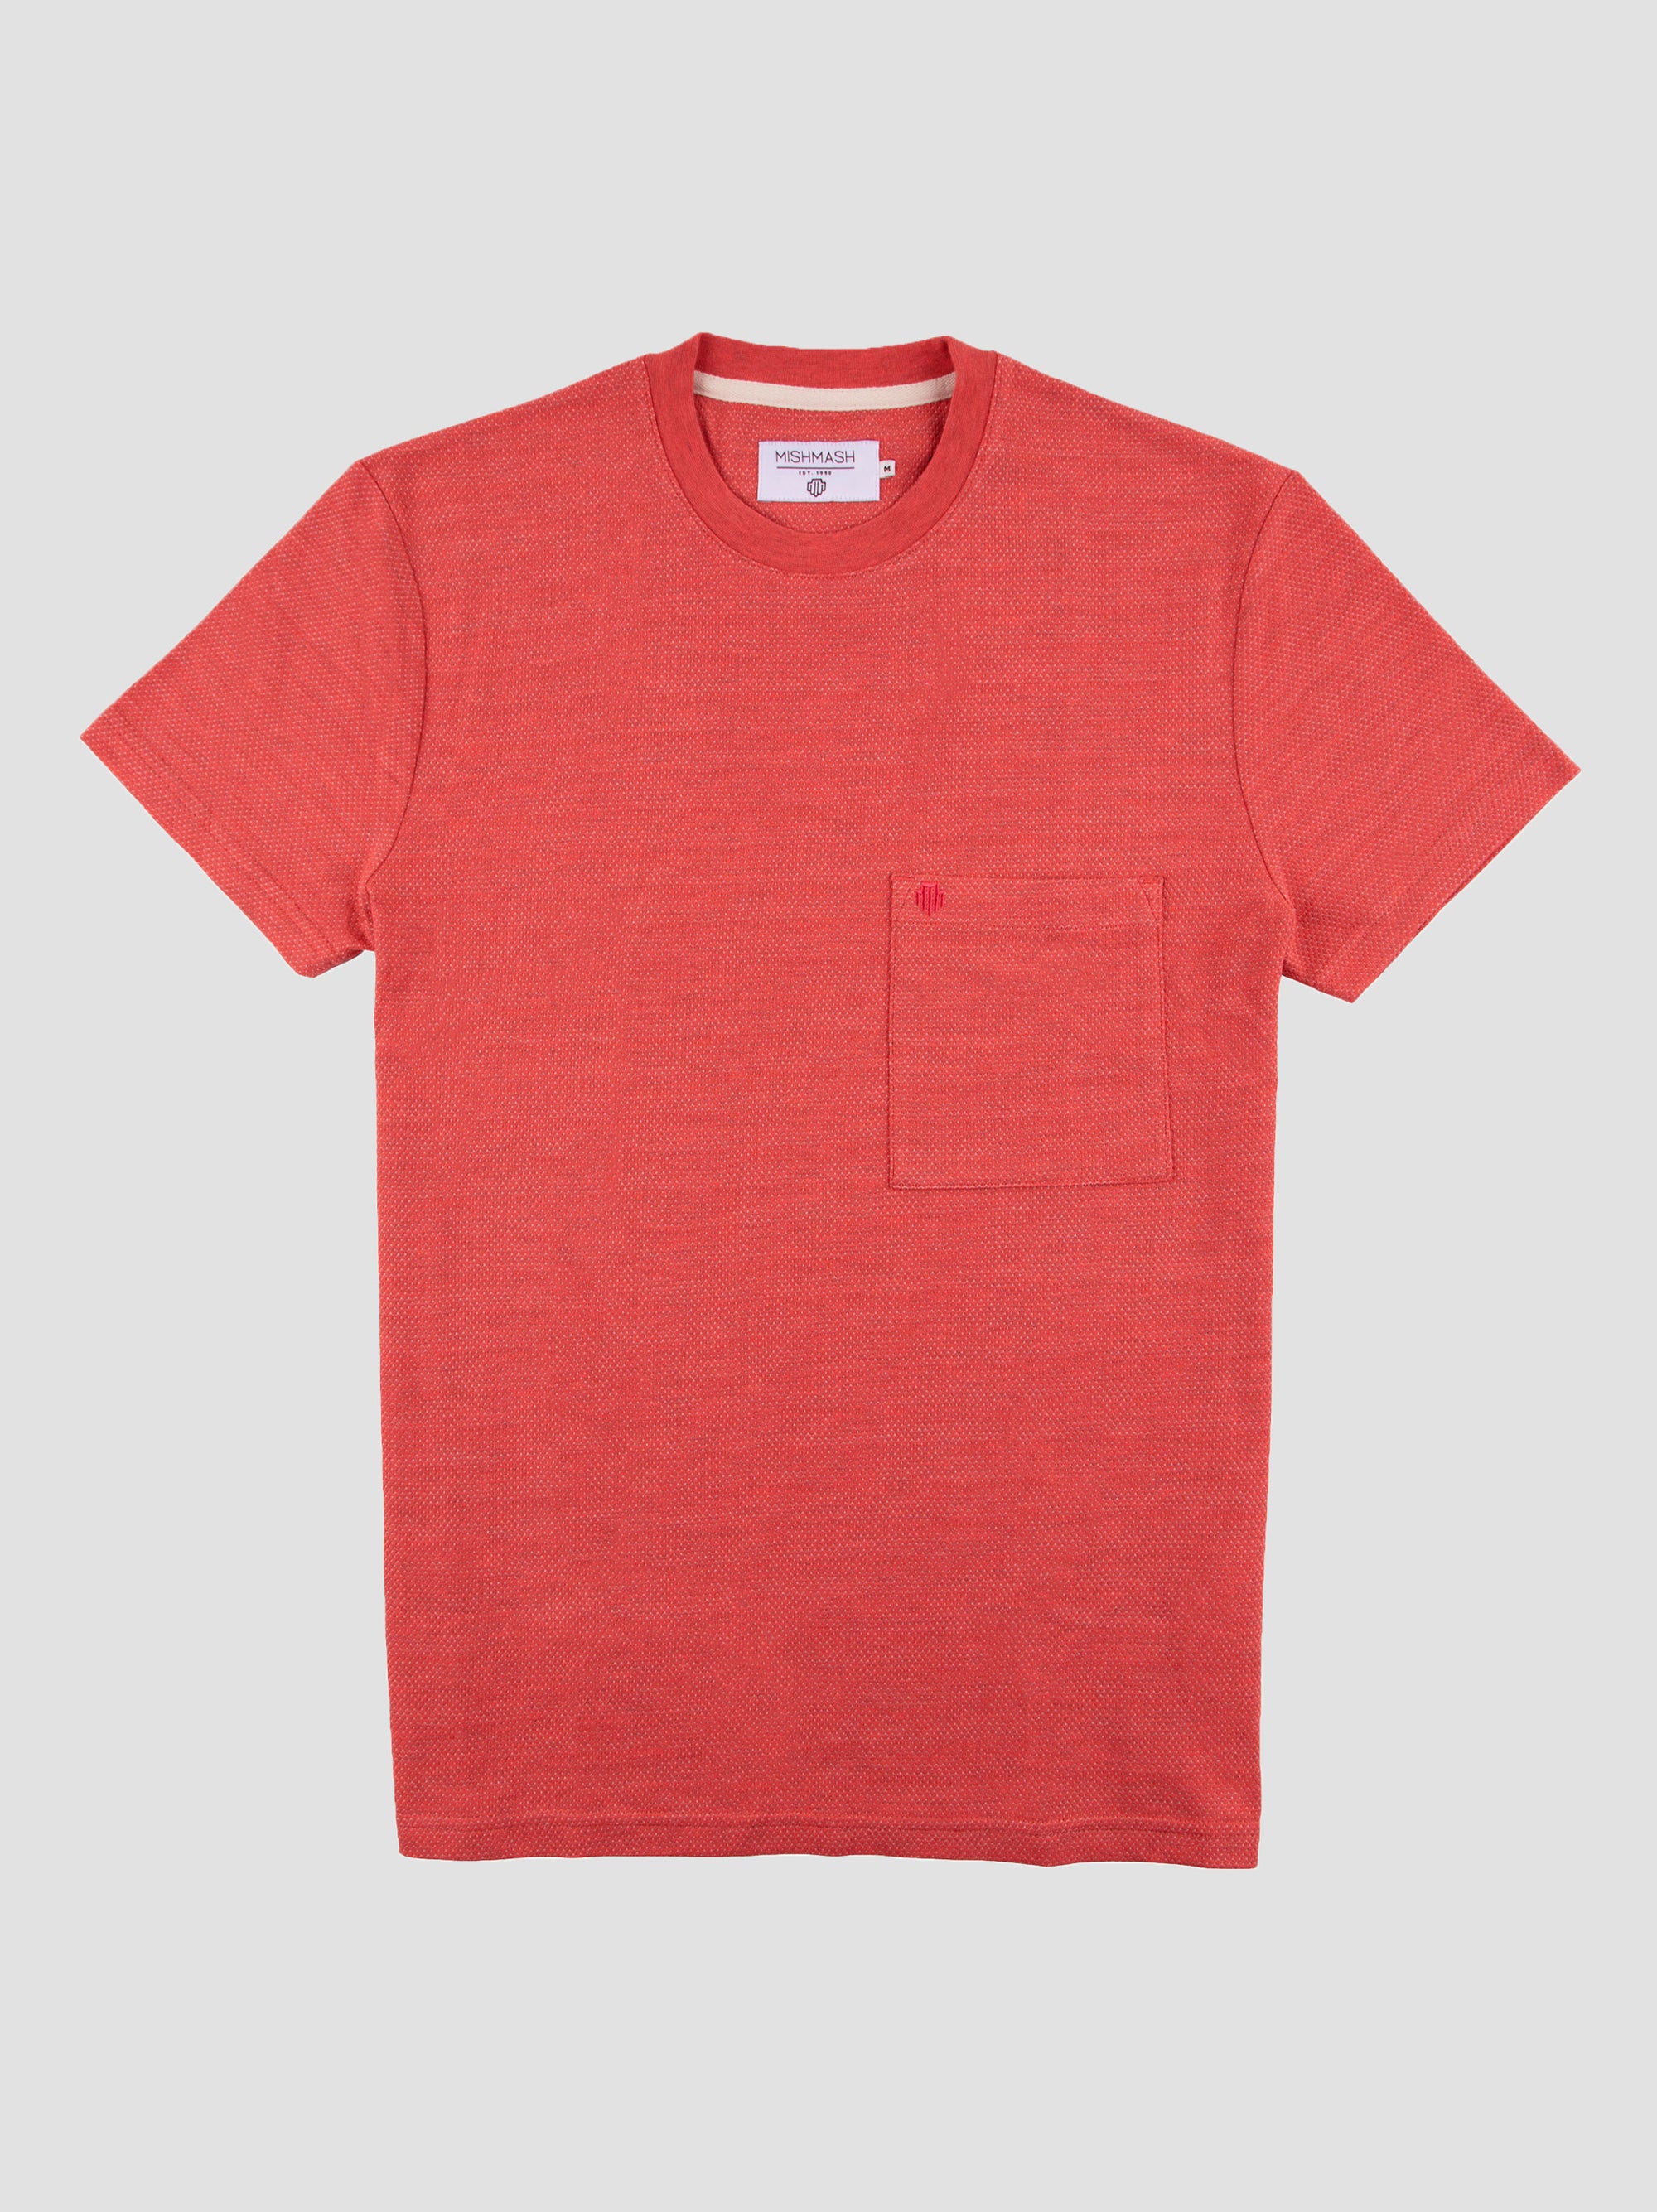 bail-red-textured-mens-jersey-short-sleeve-t-shirt-mish-mash